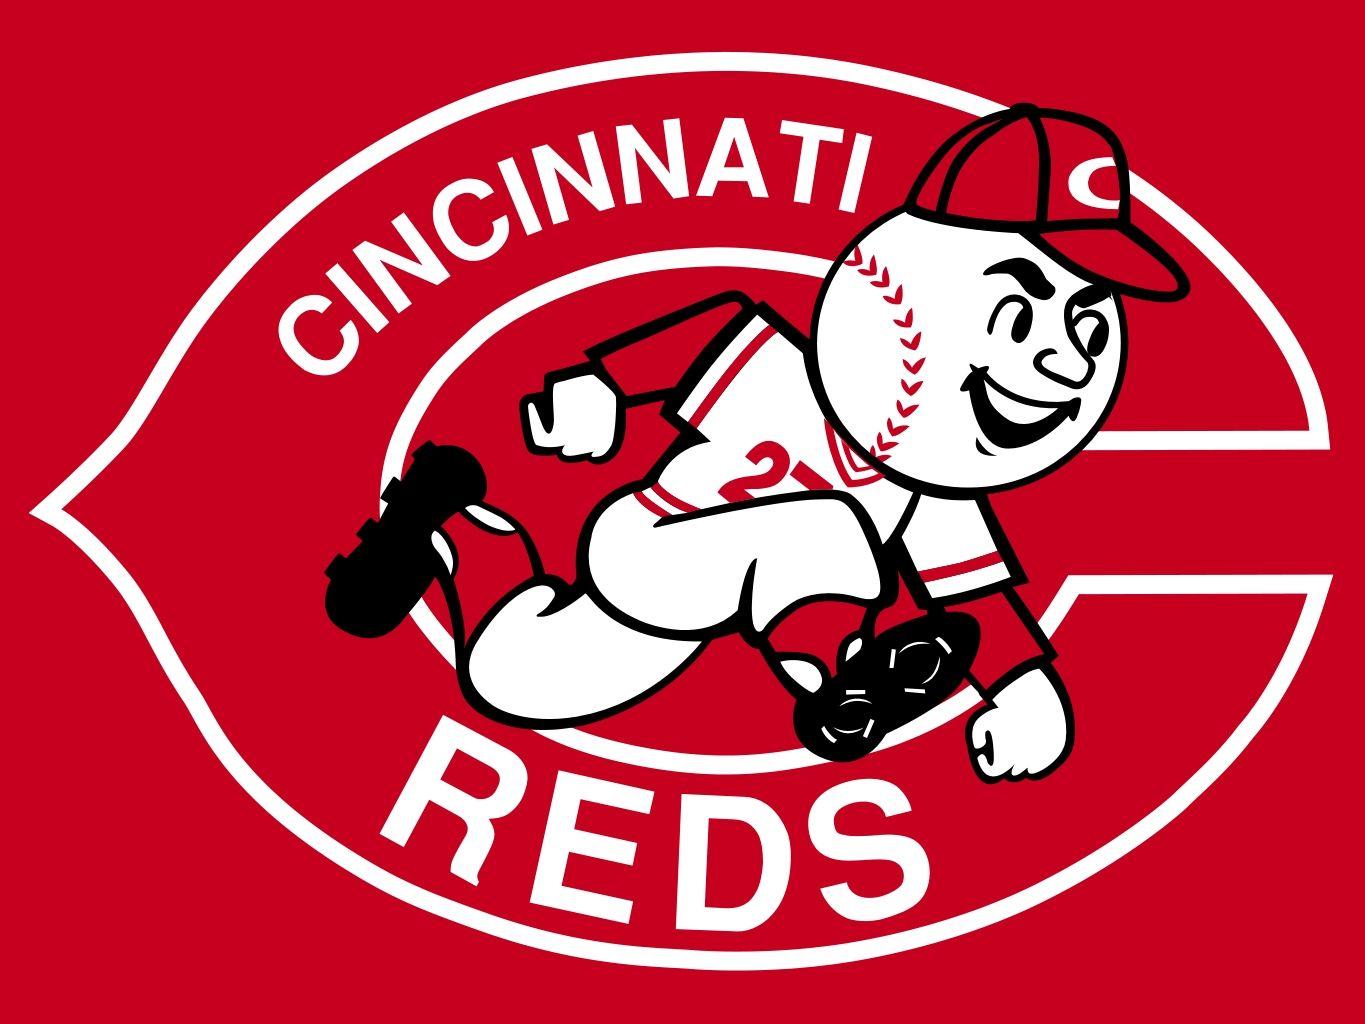 Reds Baseball Logo - Pin by Tiffany Lowles on Travel: Ohio | Cincinnati Reds, Cincinnati ...